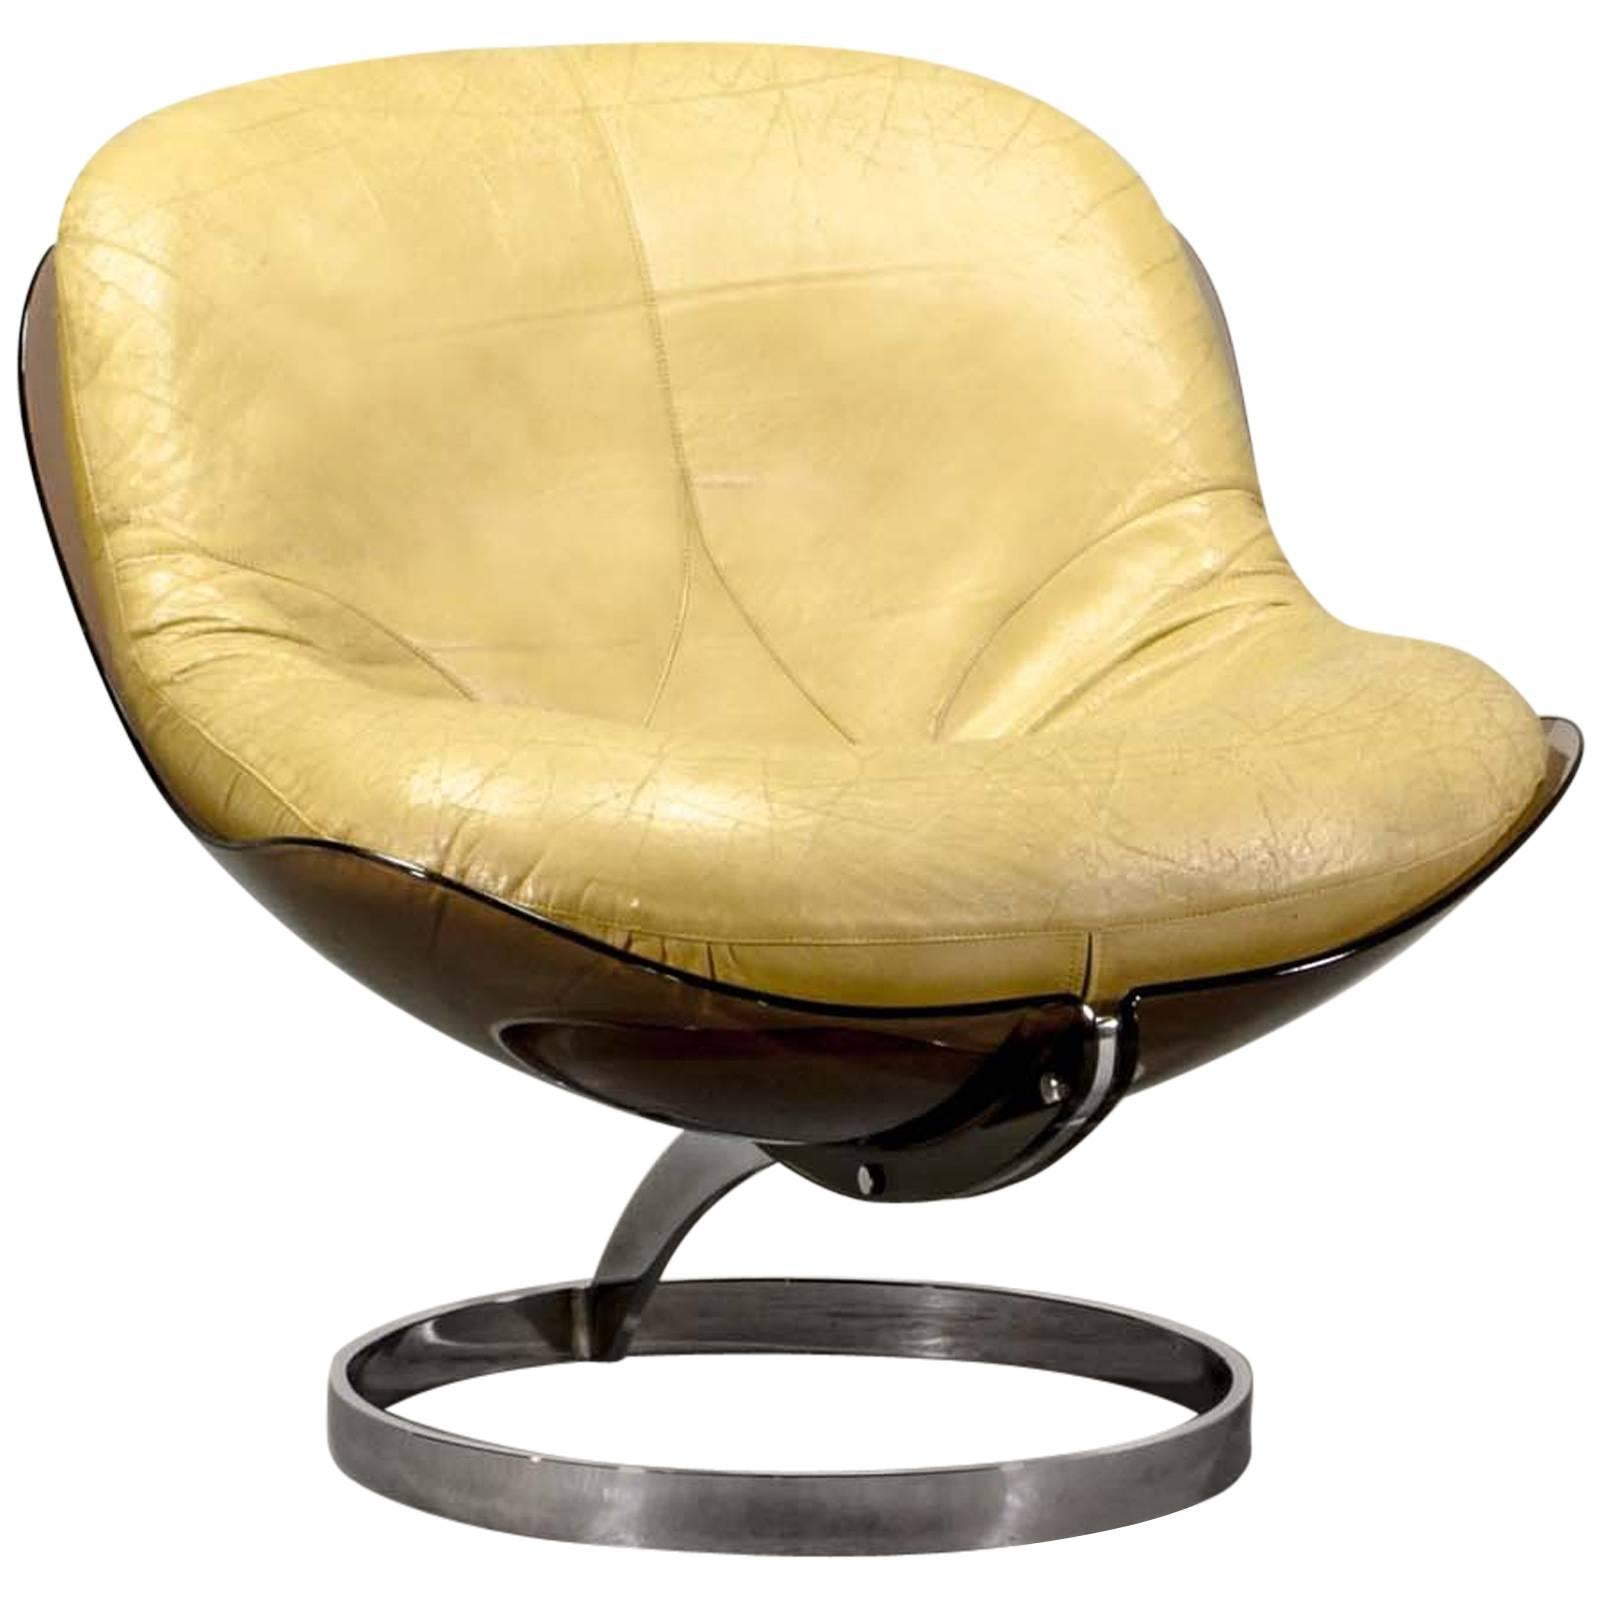 Rare Boris Tabacoff 'Sphere' Lounge Chair by MMM, 1971